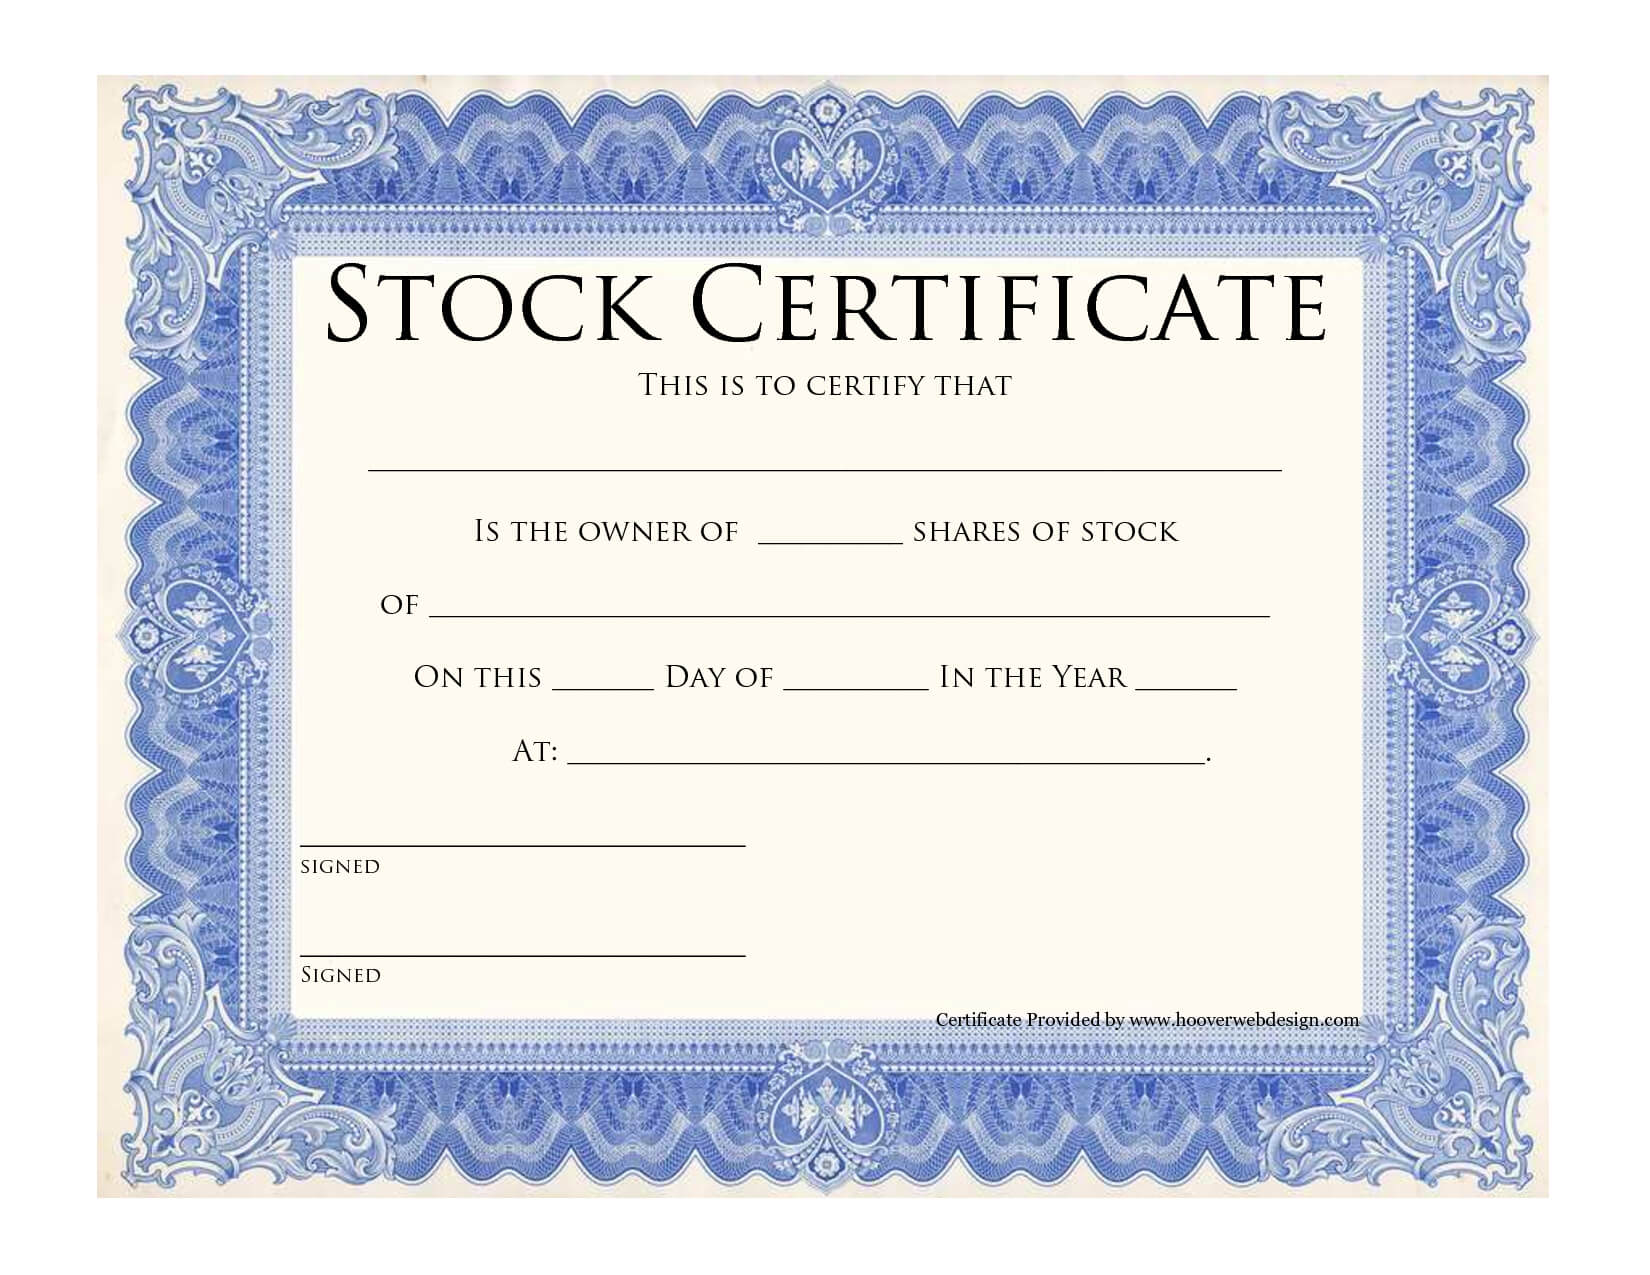 Blank Stock Certificate Template | Printable Stock In Stock Certificate Template Word